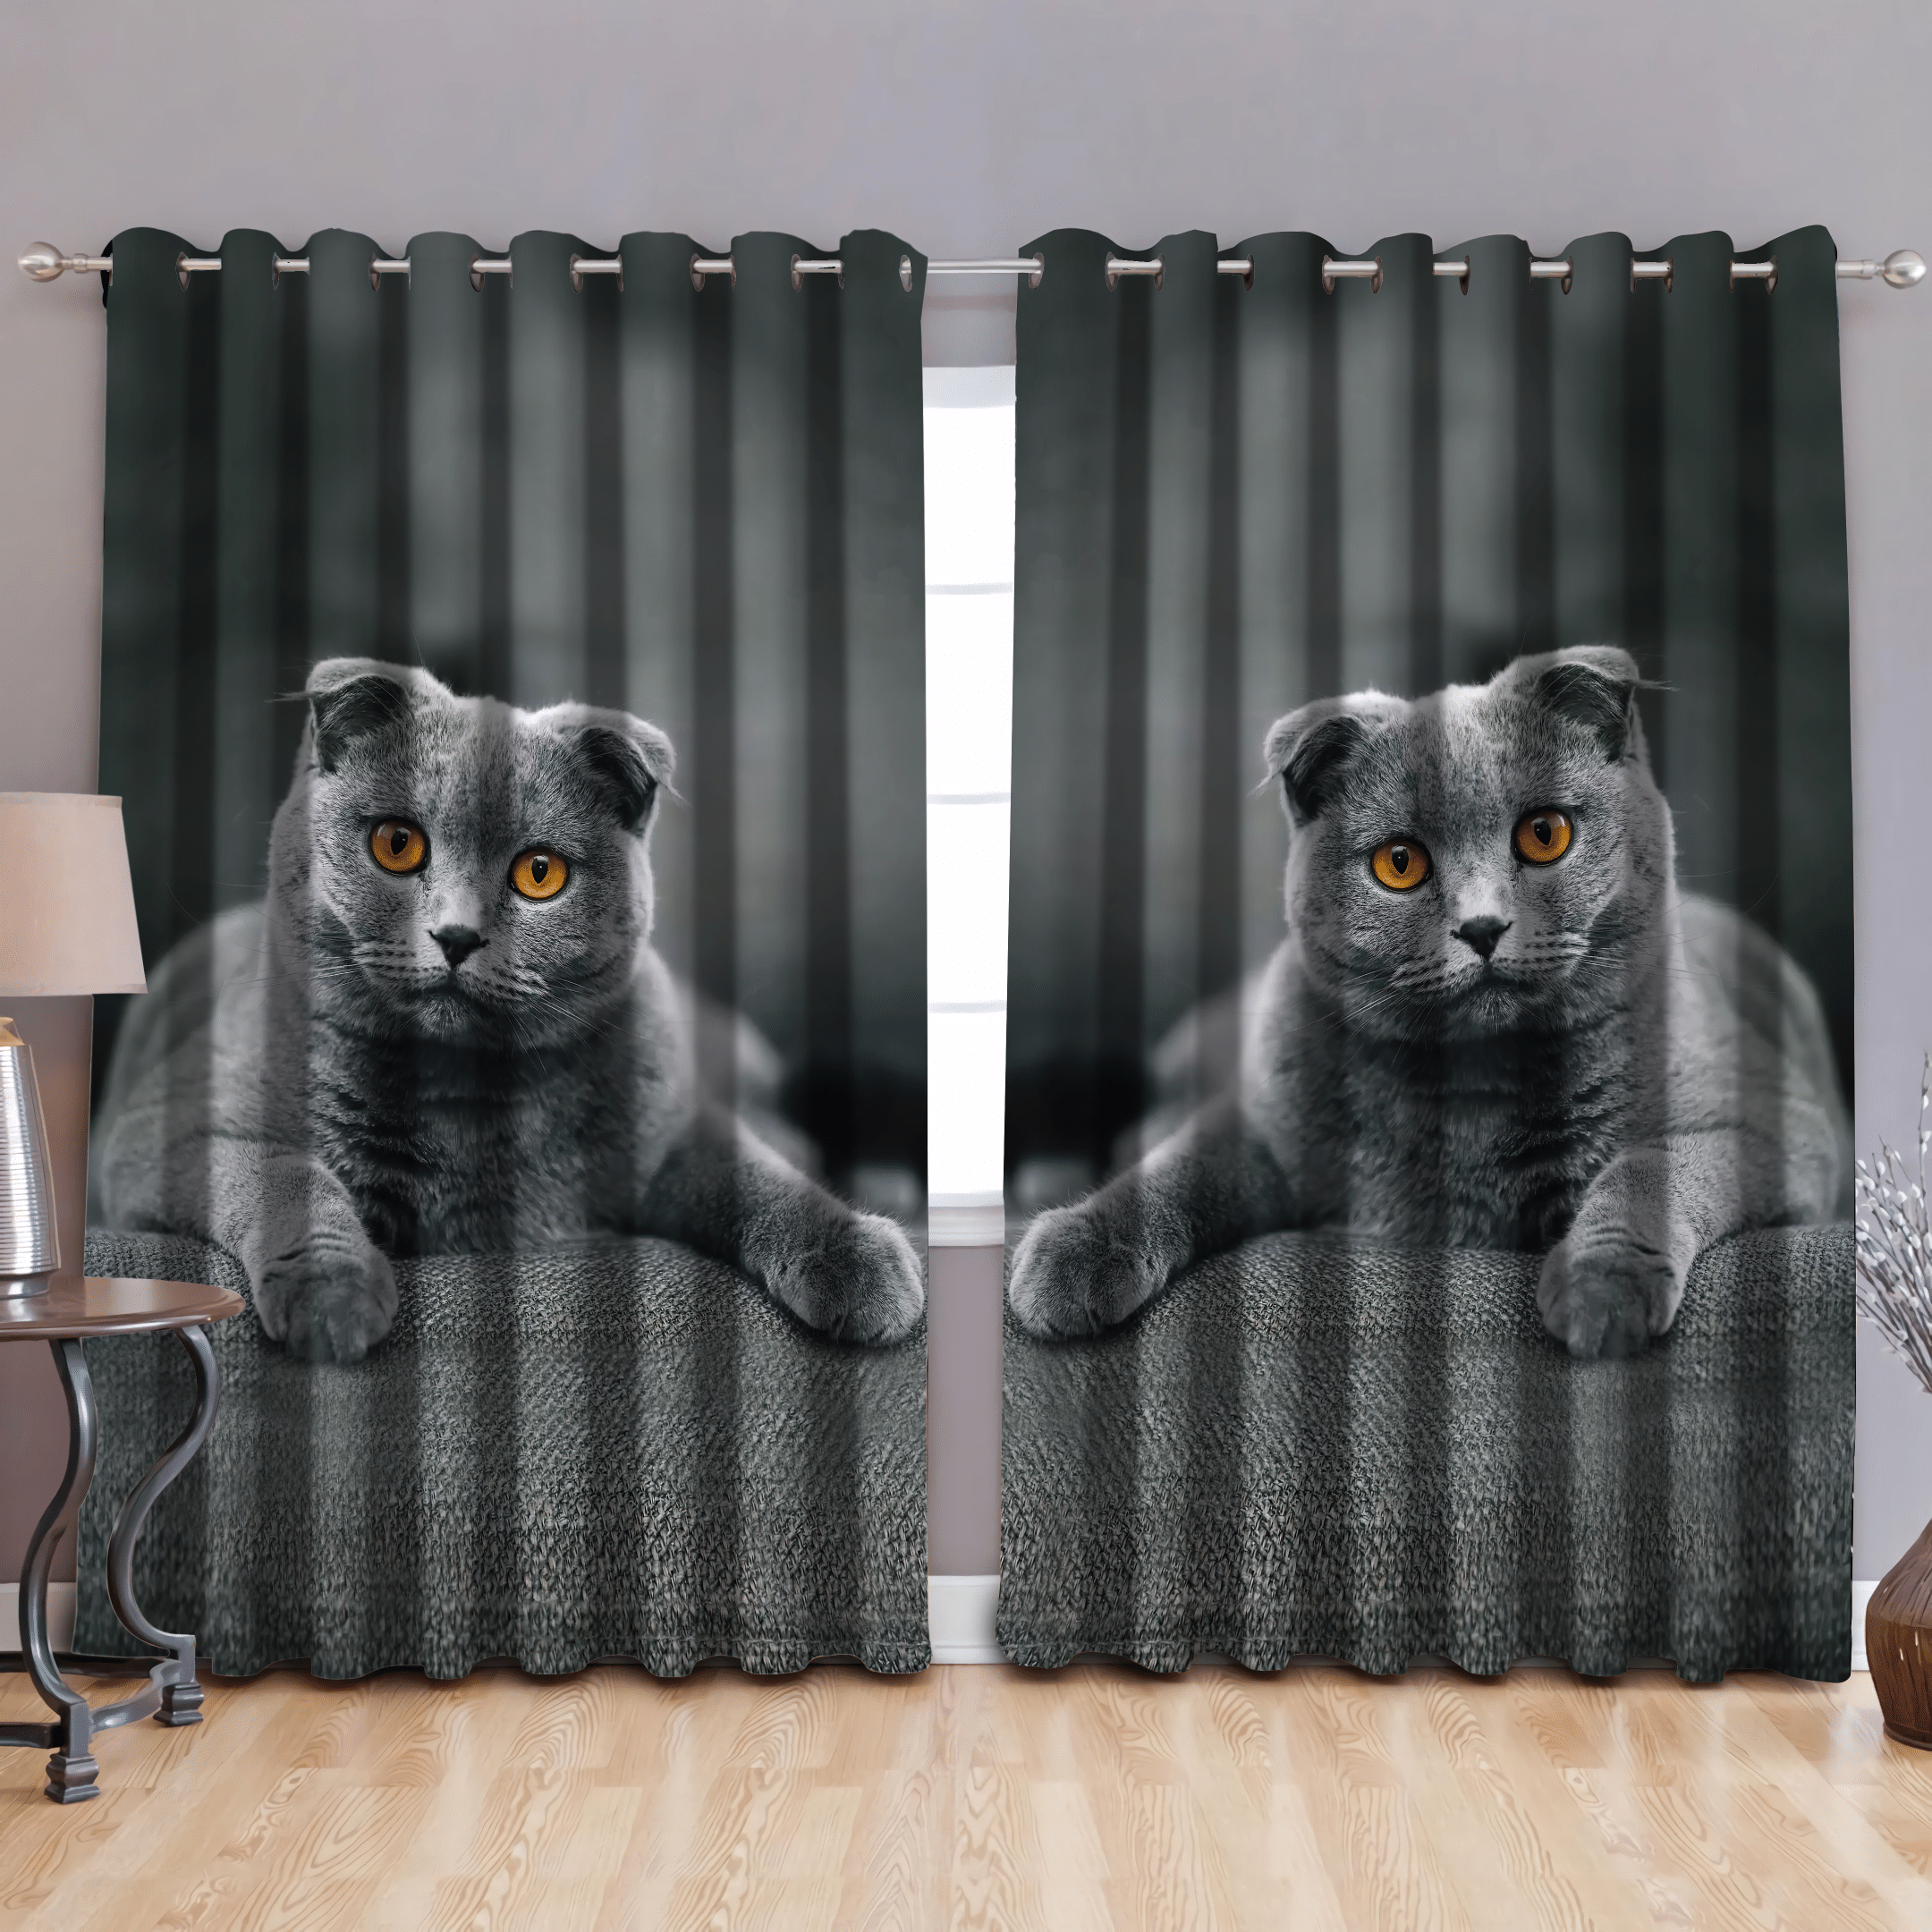 Cute Short Hair Scottish Cat Printed Window Curtain Home Decor